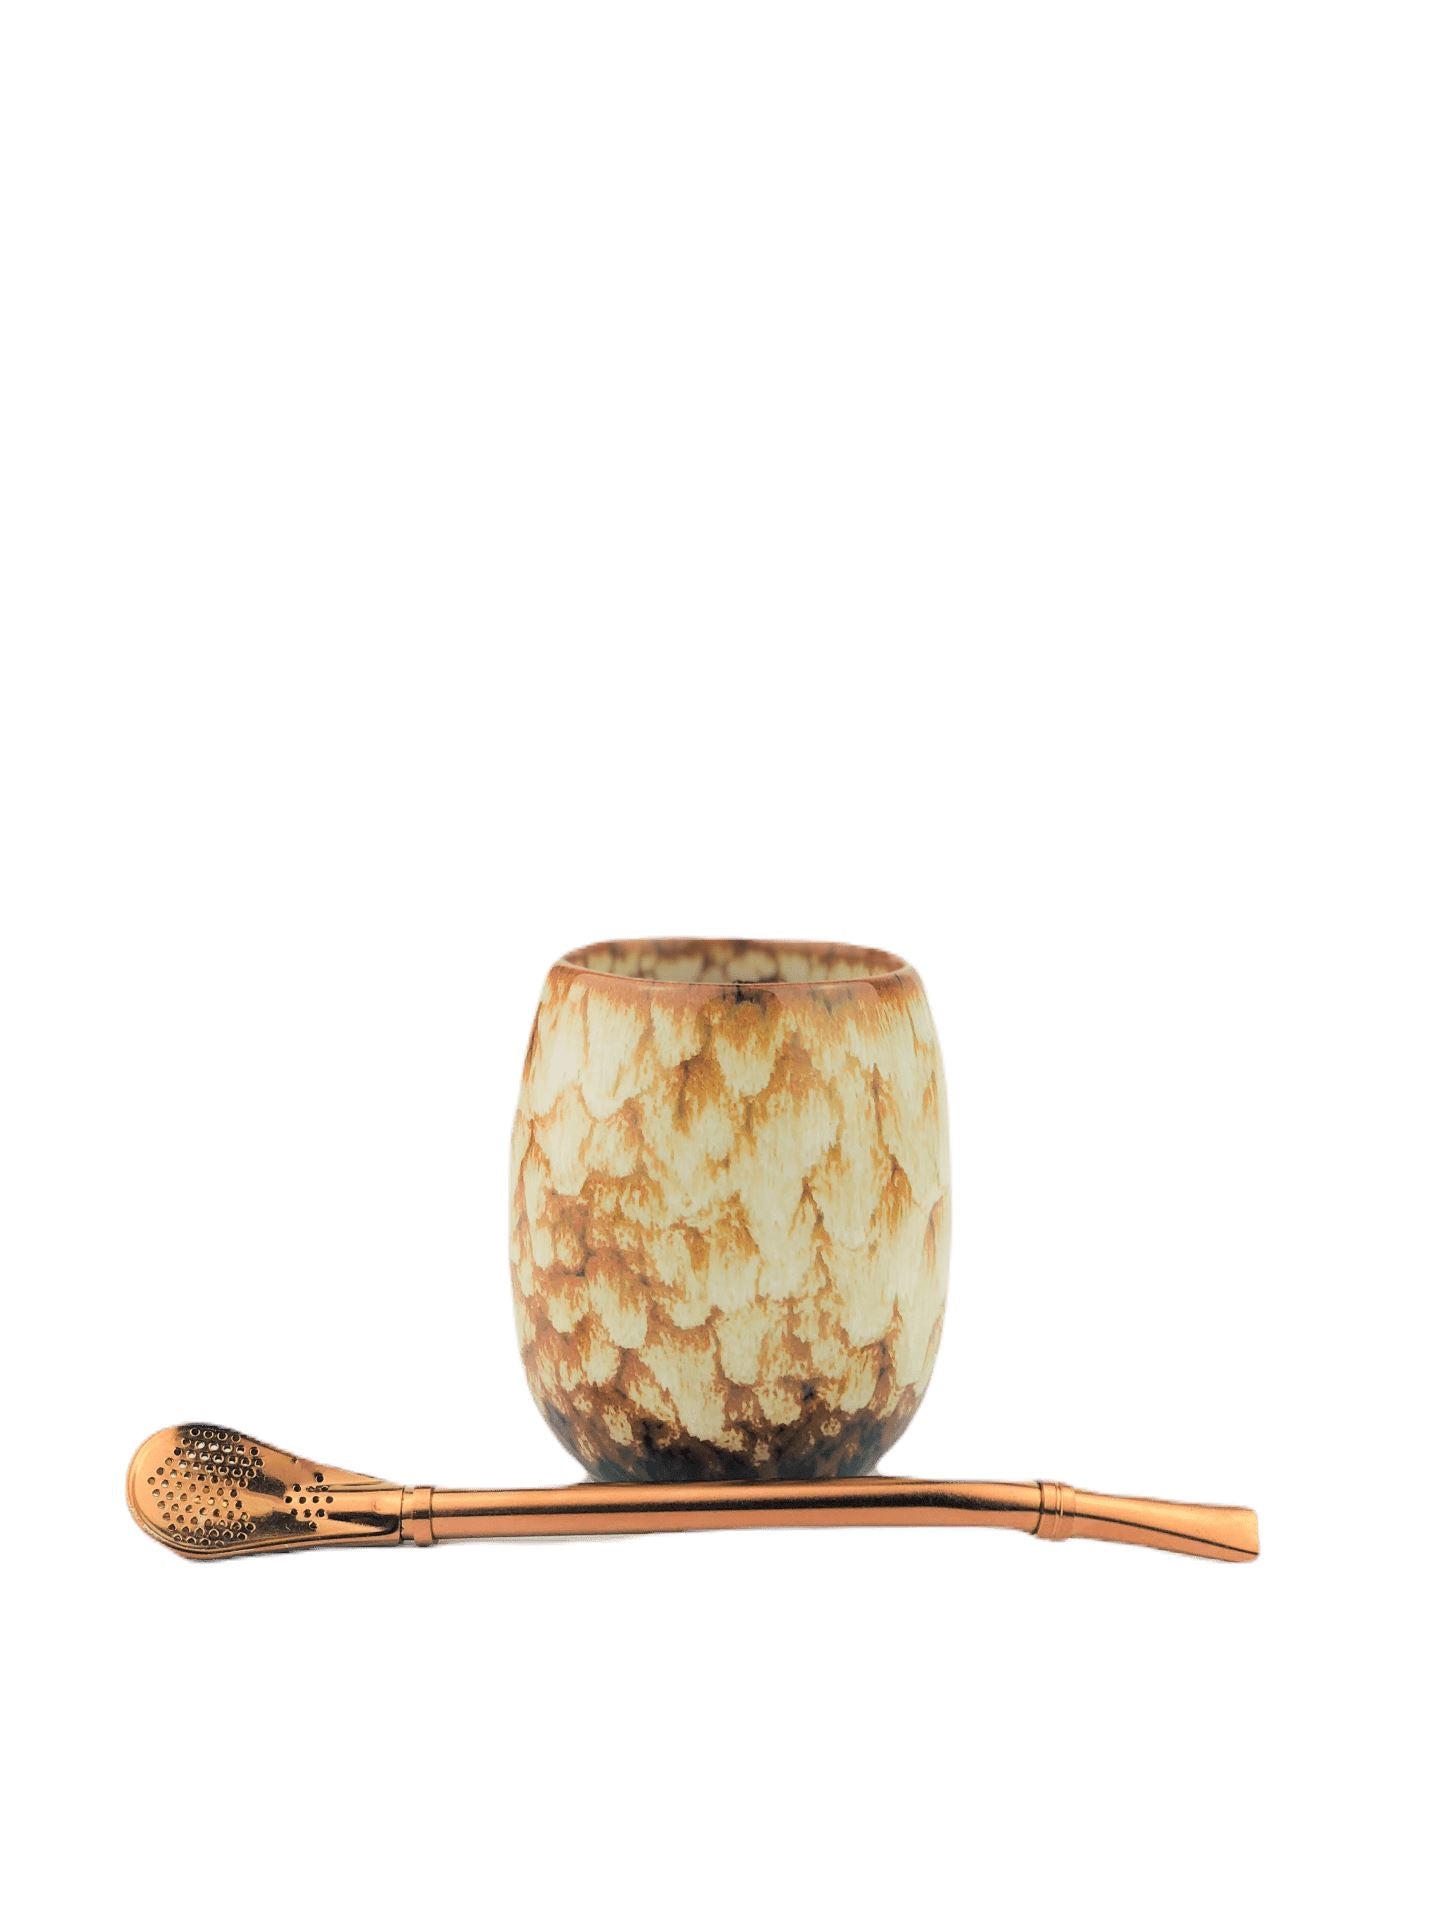 Ceramic Mate Gourd and Straw Set - Khaki (Mate and bombilla) Mates Hispanic Pantry 